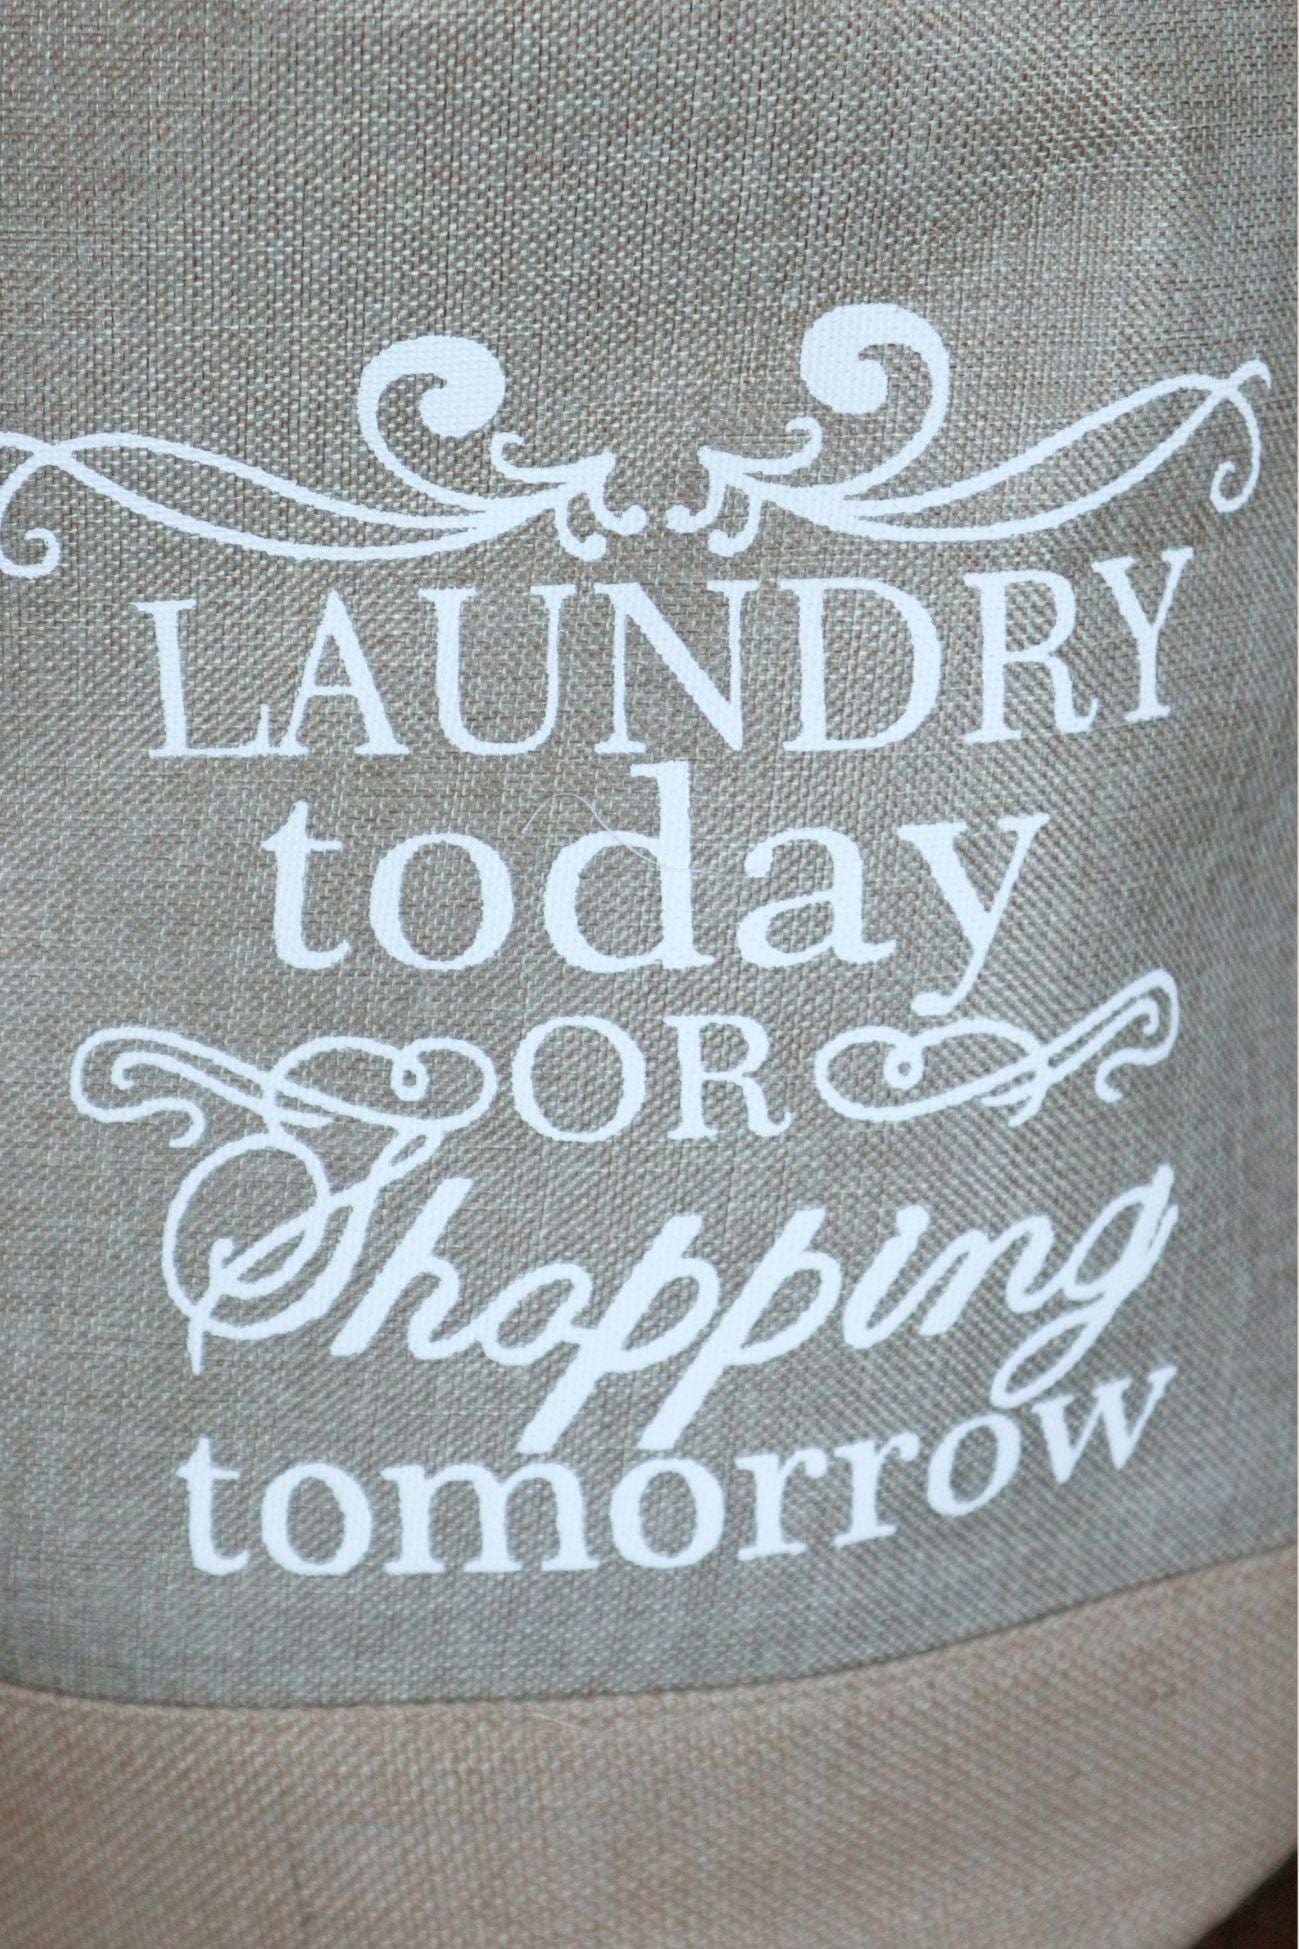 Item International Laundry Today Laundry Today - Cesto portabiancheria beige grande con manici | Item International